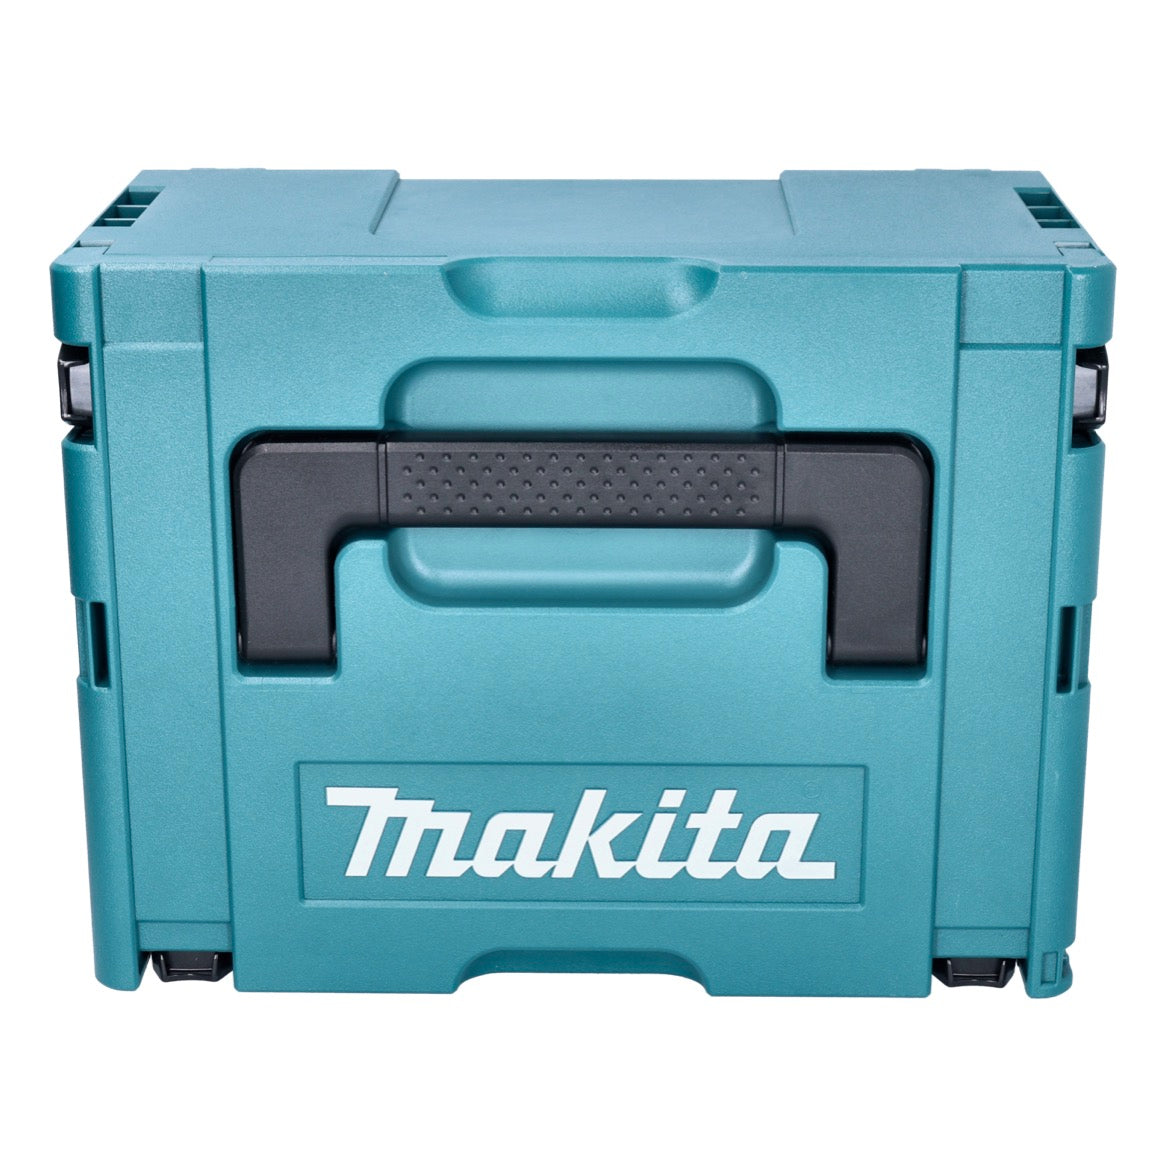 Makita DJV 181 ZJ Akku Stichsäge 18 V Brushless + 5 tlg. Stichsägeblatt Set + Makpac - ohne Akku, ohne Ladegerät